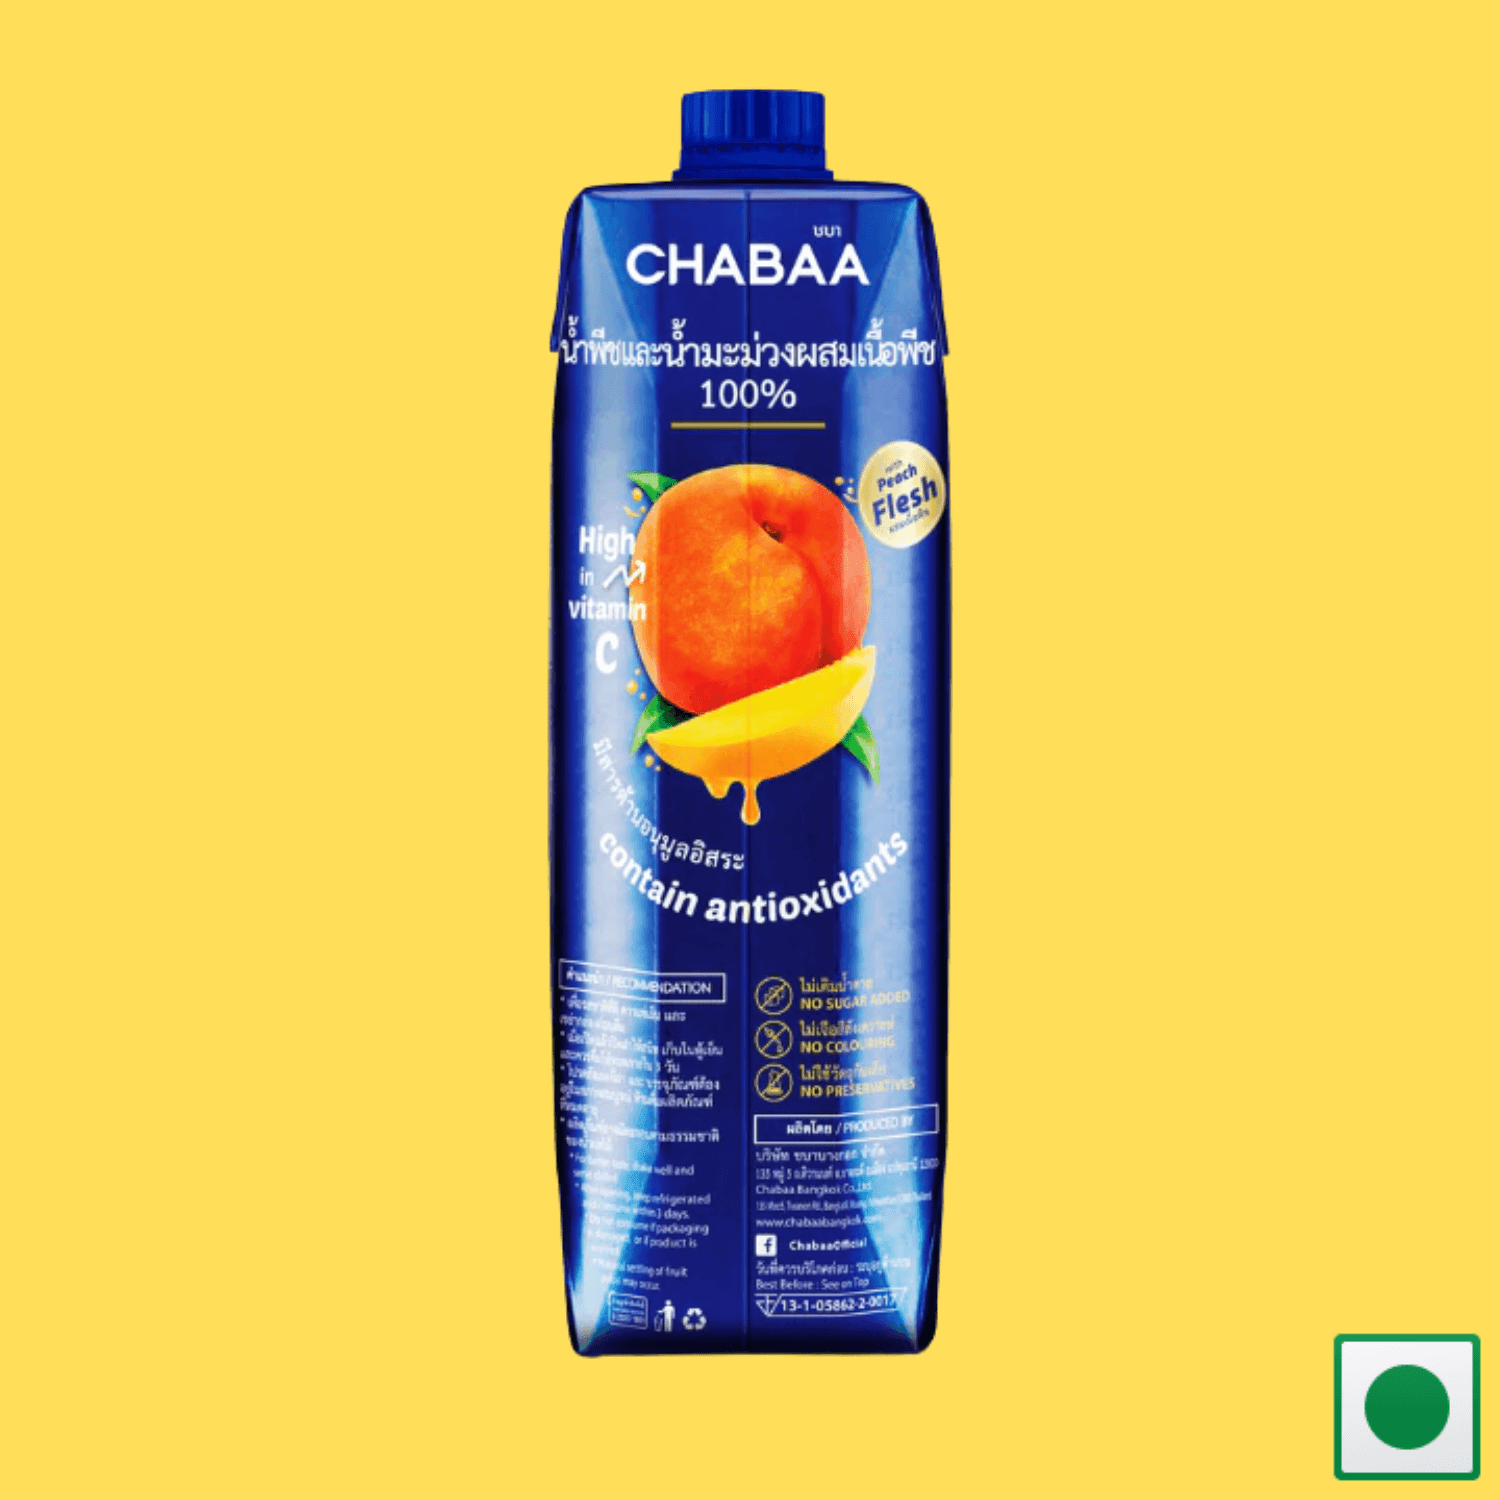 Chabaa Peach and Mango Juice 1L (Imported) - Super 7 Mart